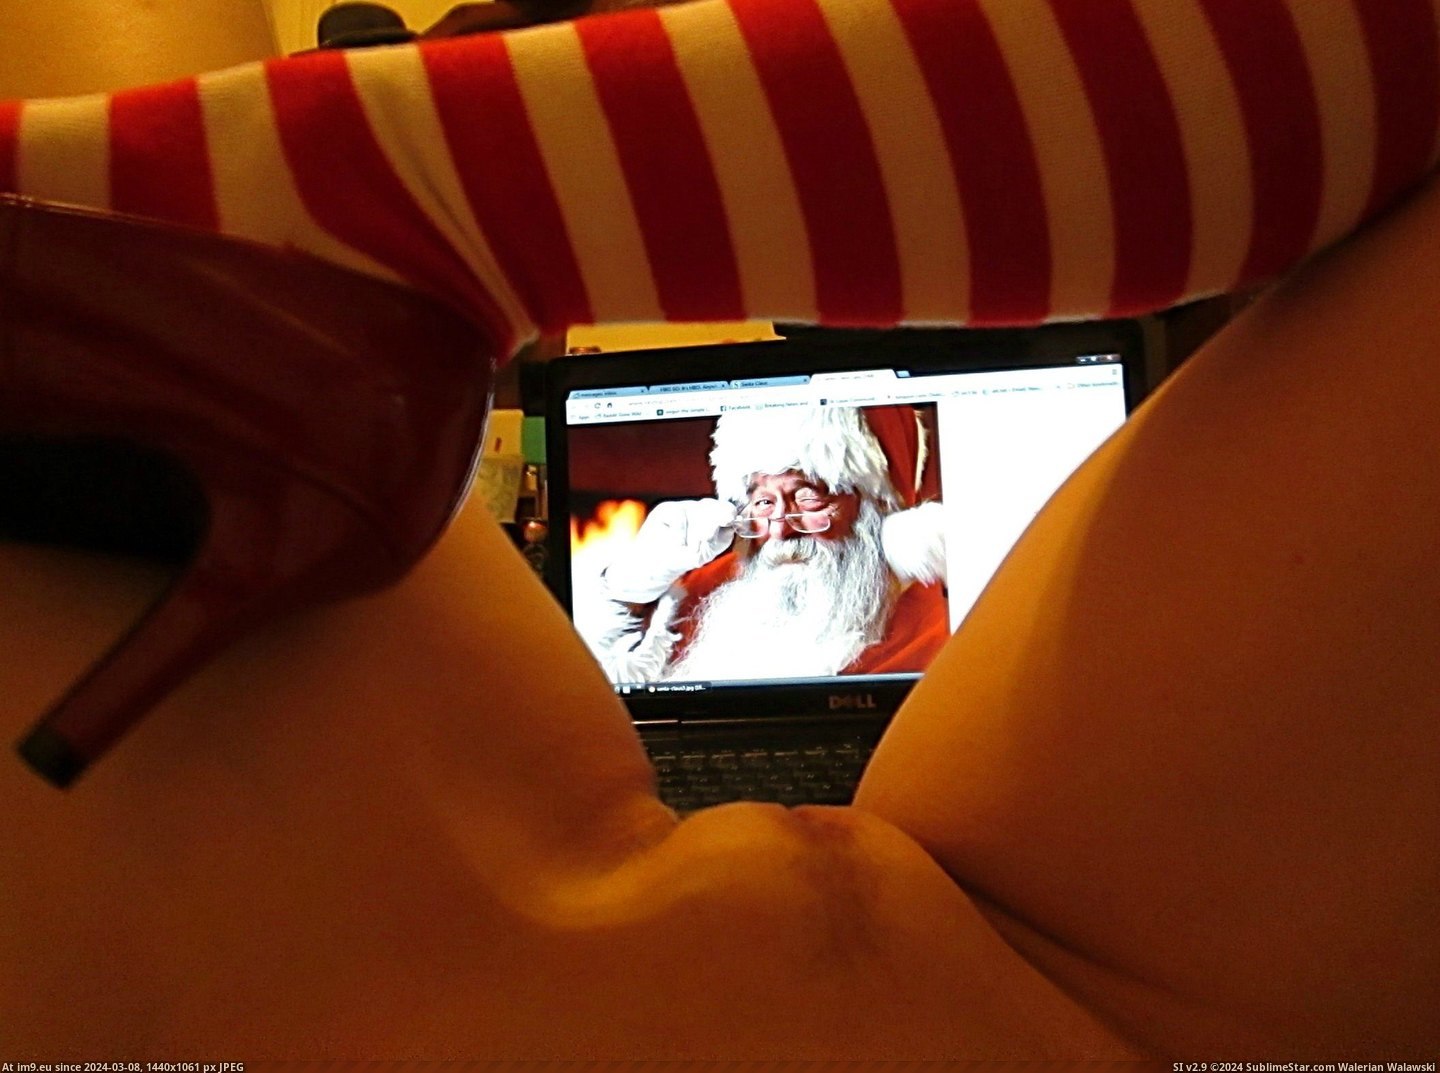 #Saw #Santa #Clause #Mommy #Lashing [Gonewild] I Saw Mommy {F}lashing Santa Clause Pic. (Изображение из альбом My r/GONEWILD favs))